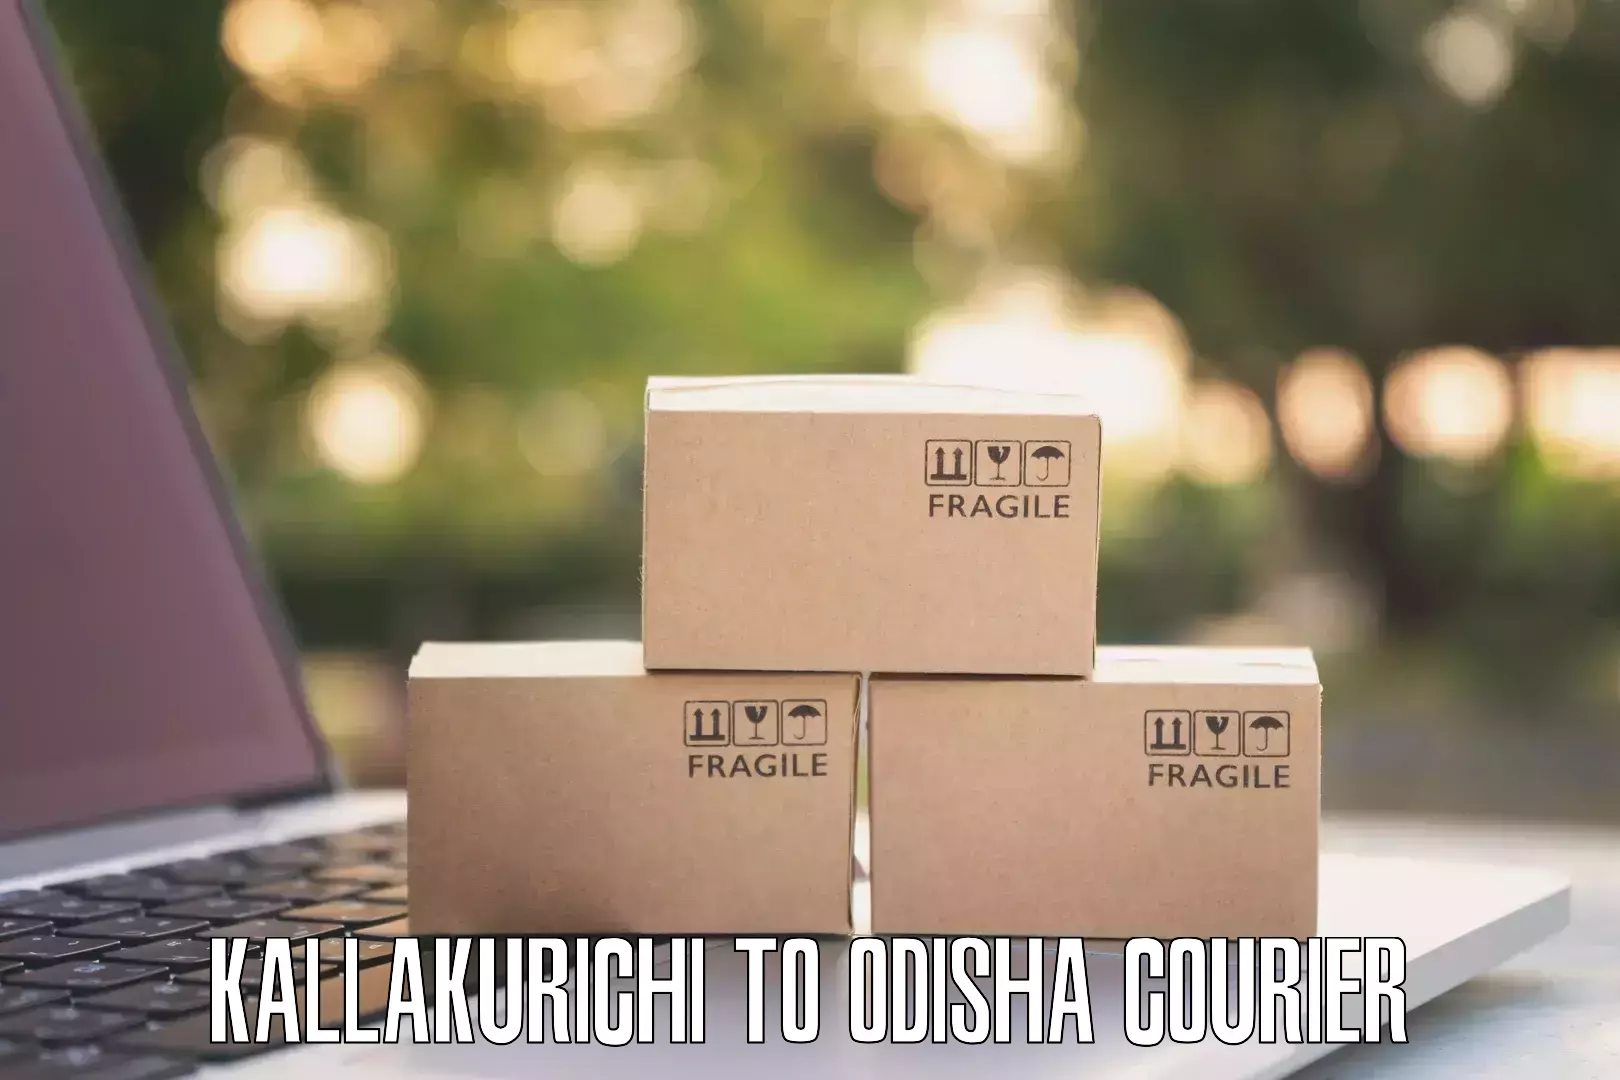 Efficient package consolidation Kallakurichi to Kesinga